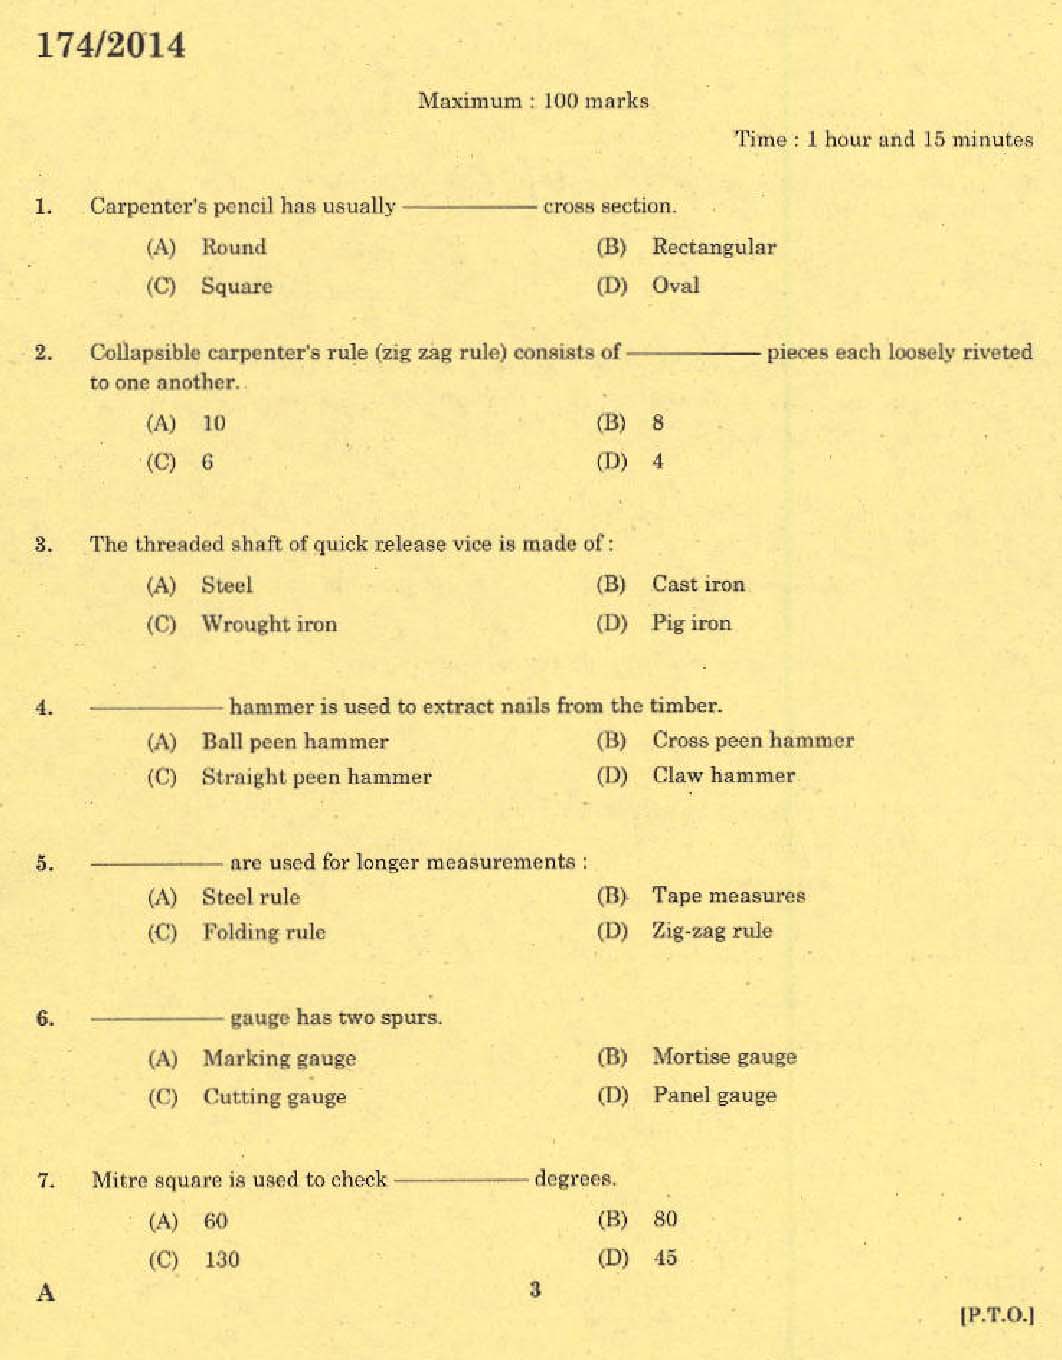 KPSC Tradesman Carpentry Exam 2014 Code 1742014 1